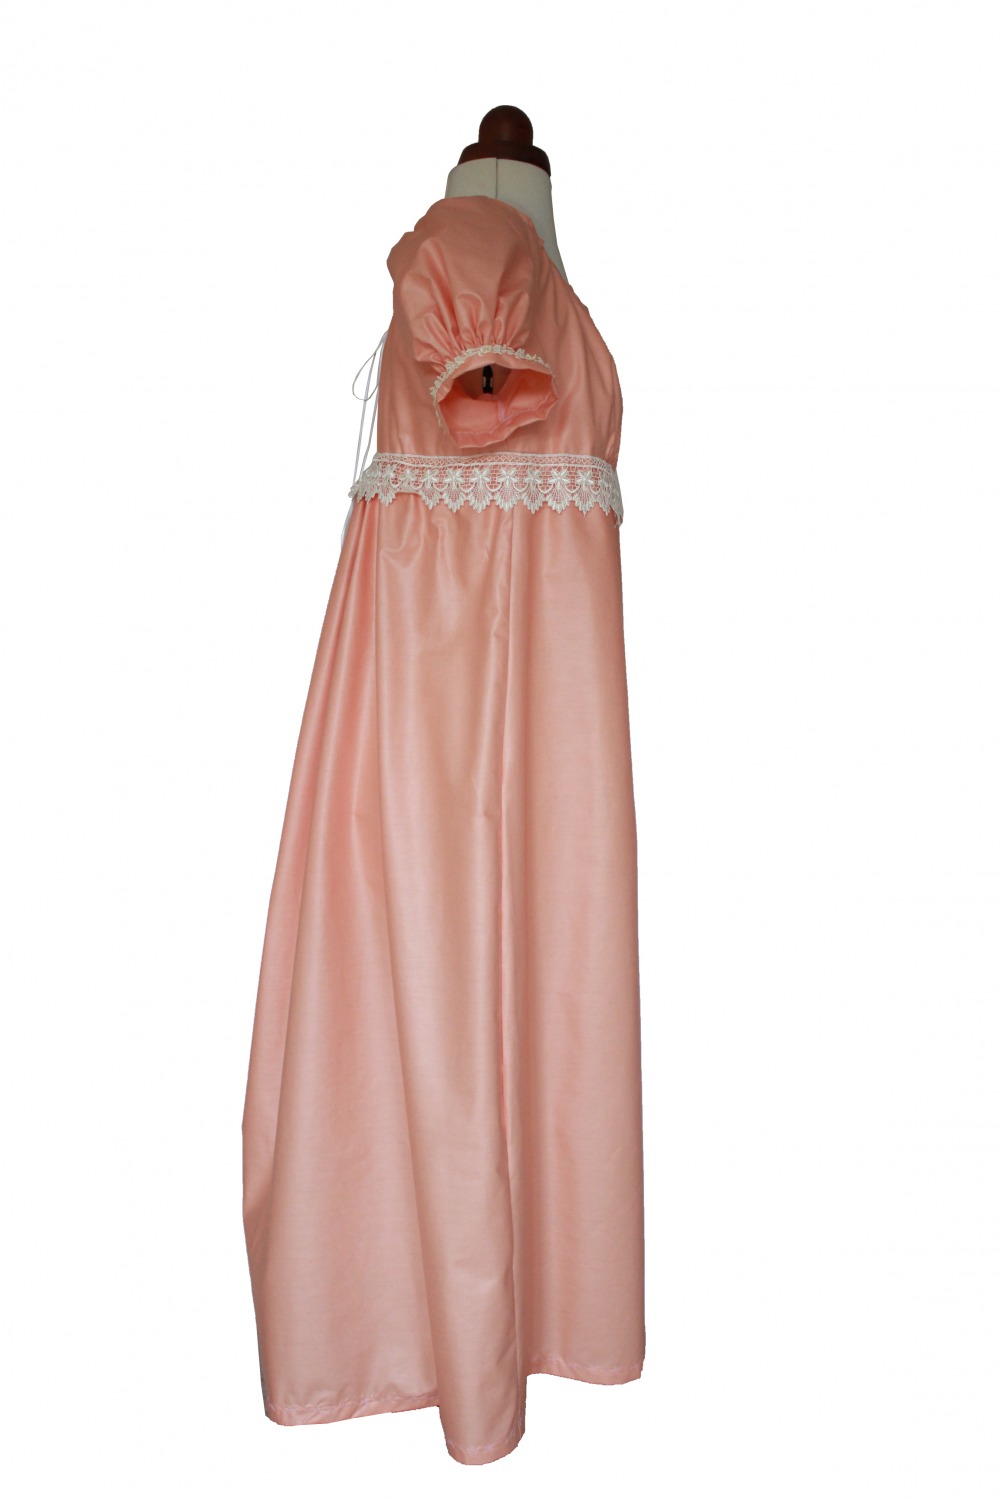 Ladies Petite 18th 19th Regency Jane Austen Day Costume Size 12 - 14 Image